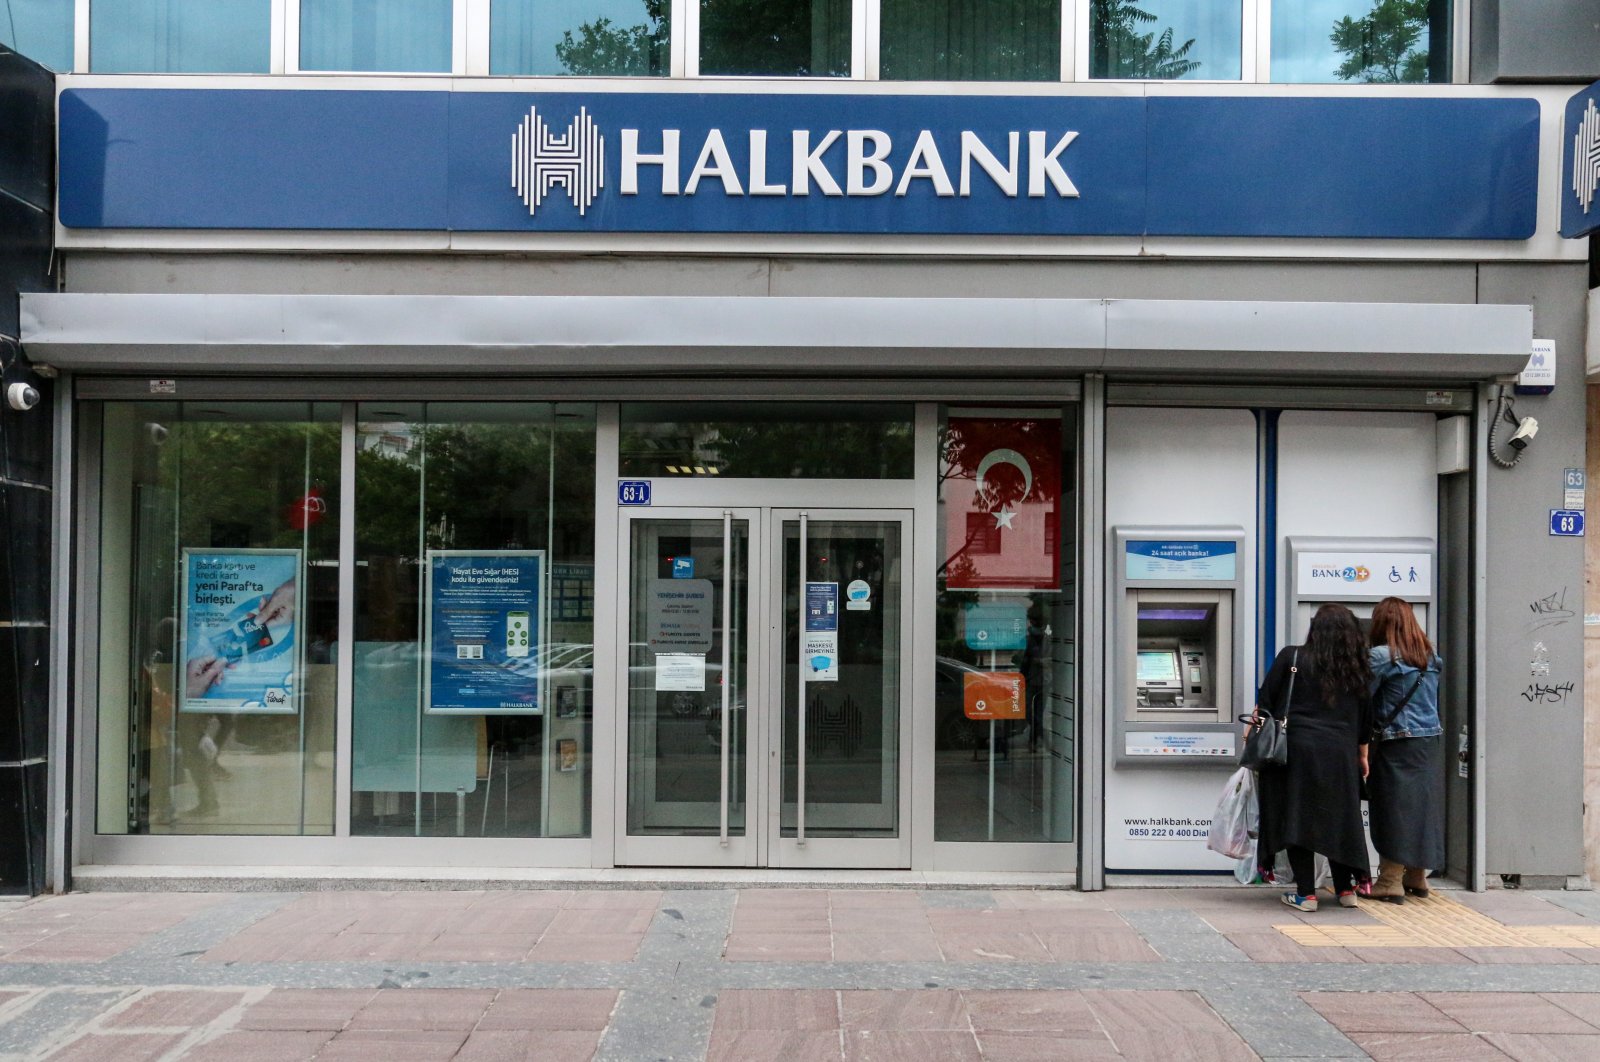 People are seen using ATM machines at Halkbank in the capital Ankara, Turkey, Jan. 5, 2021. (Reuters Photo)